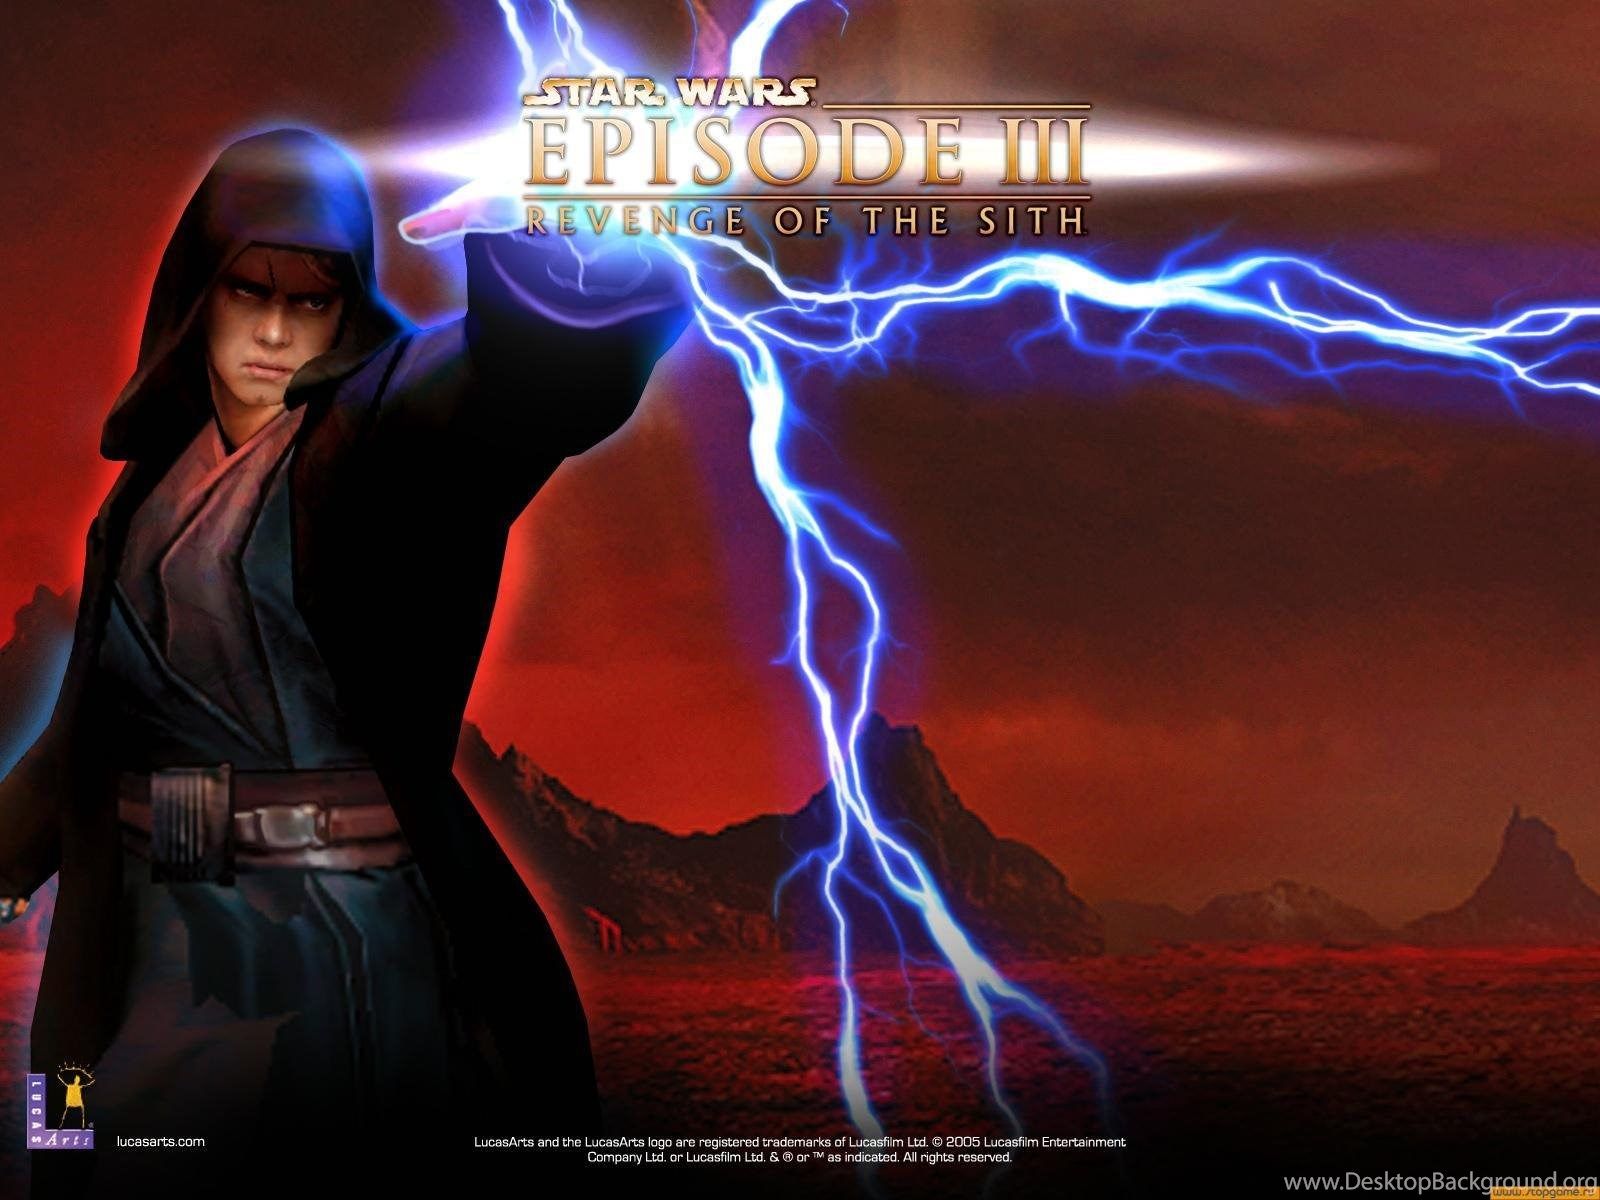 Star Wars: Episode III Revenge Of The Sith The Wallpaper On. Desktop Background